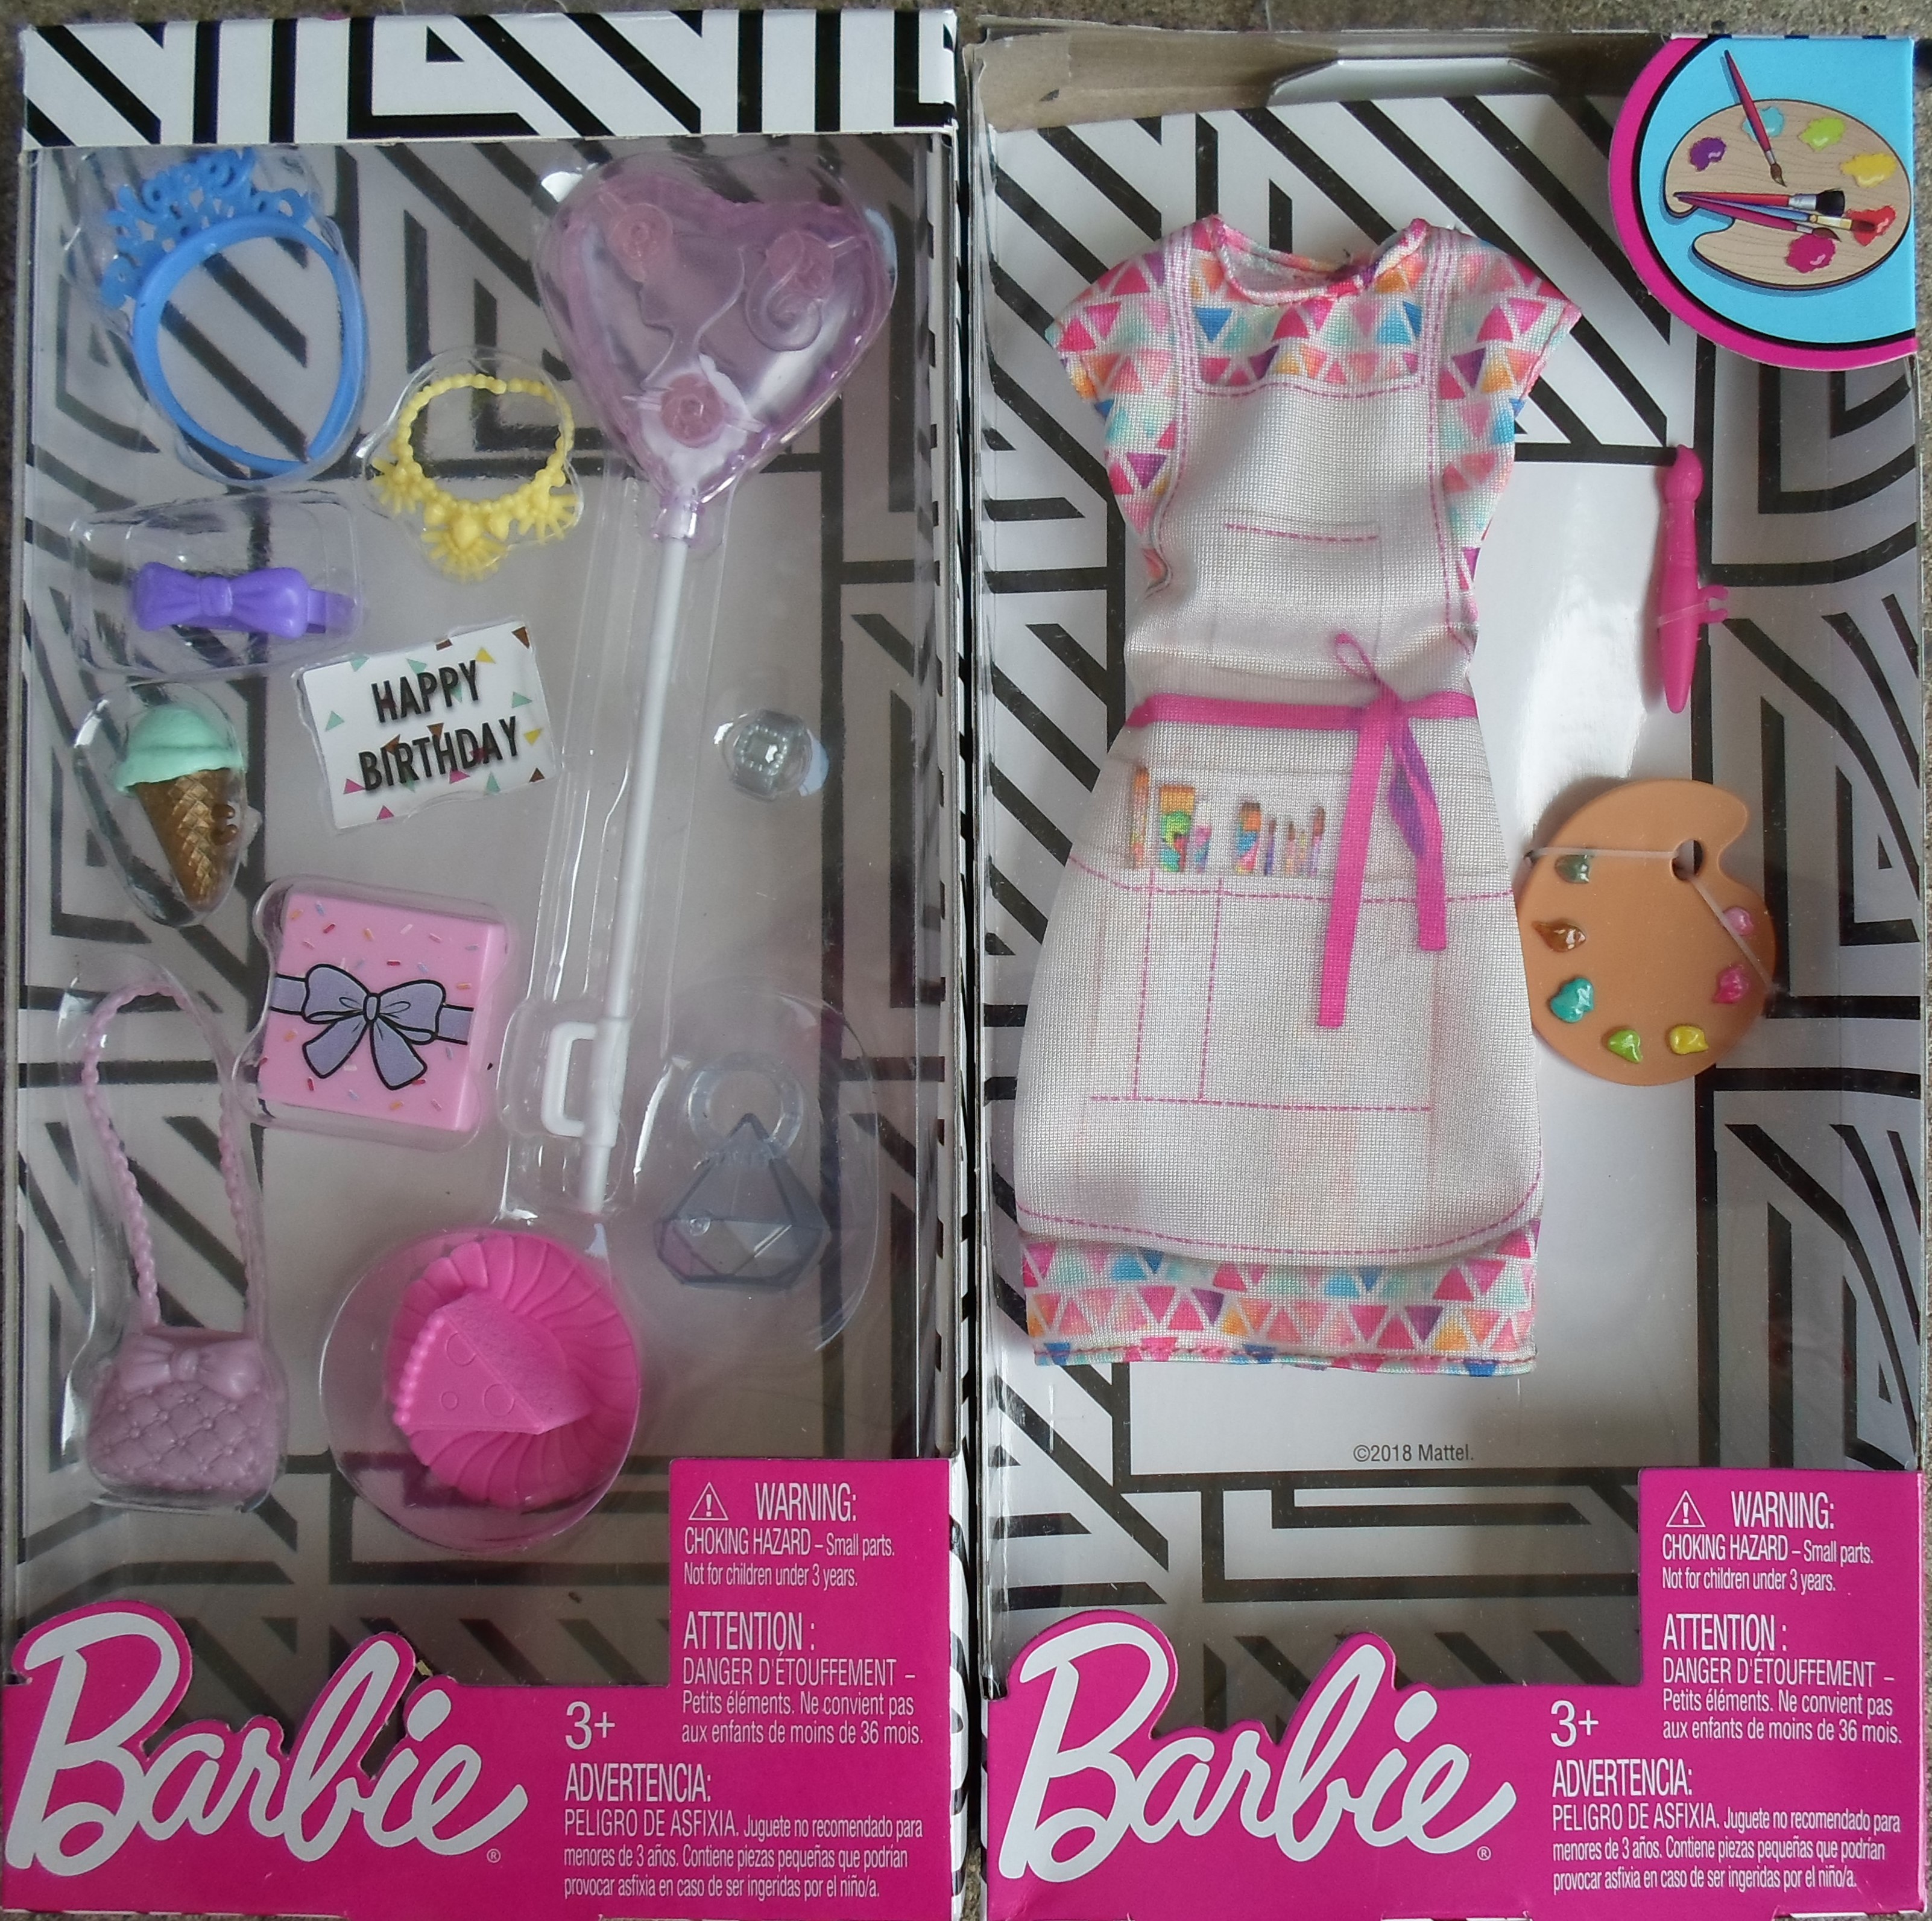 DIY Barbie Blog : Dollar Tree Alert! More Barbie Clothes & Accessories